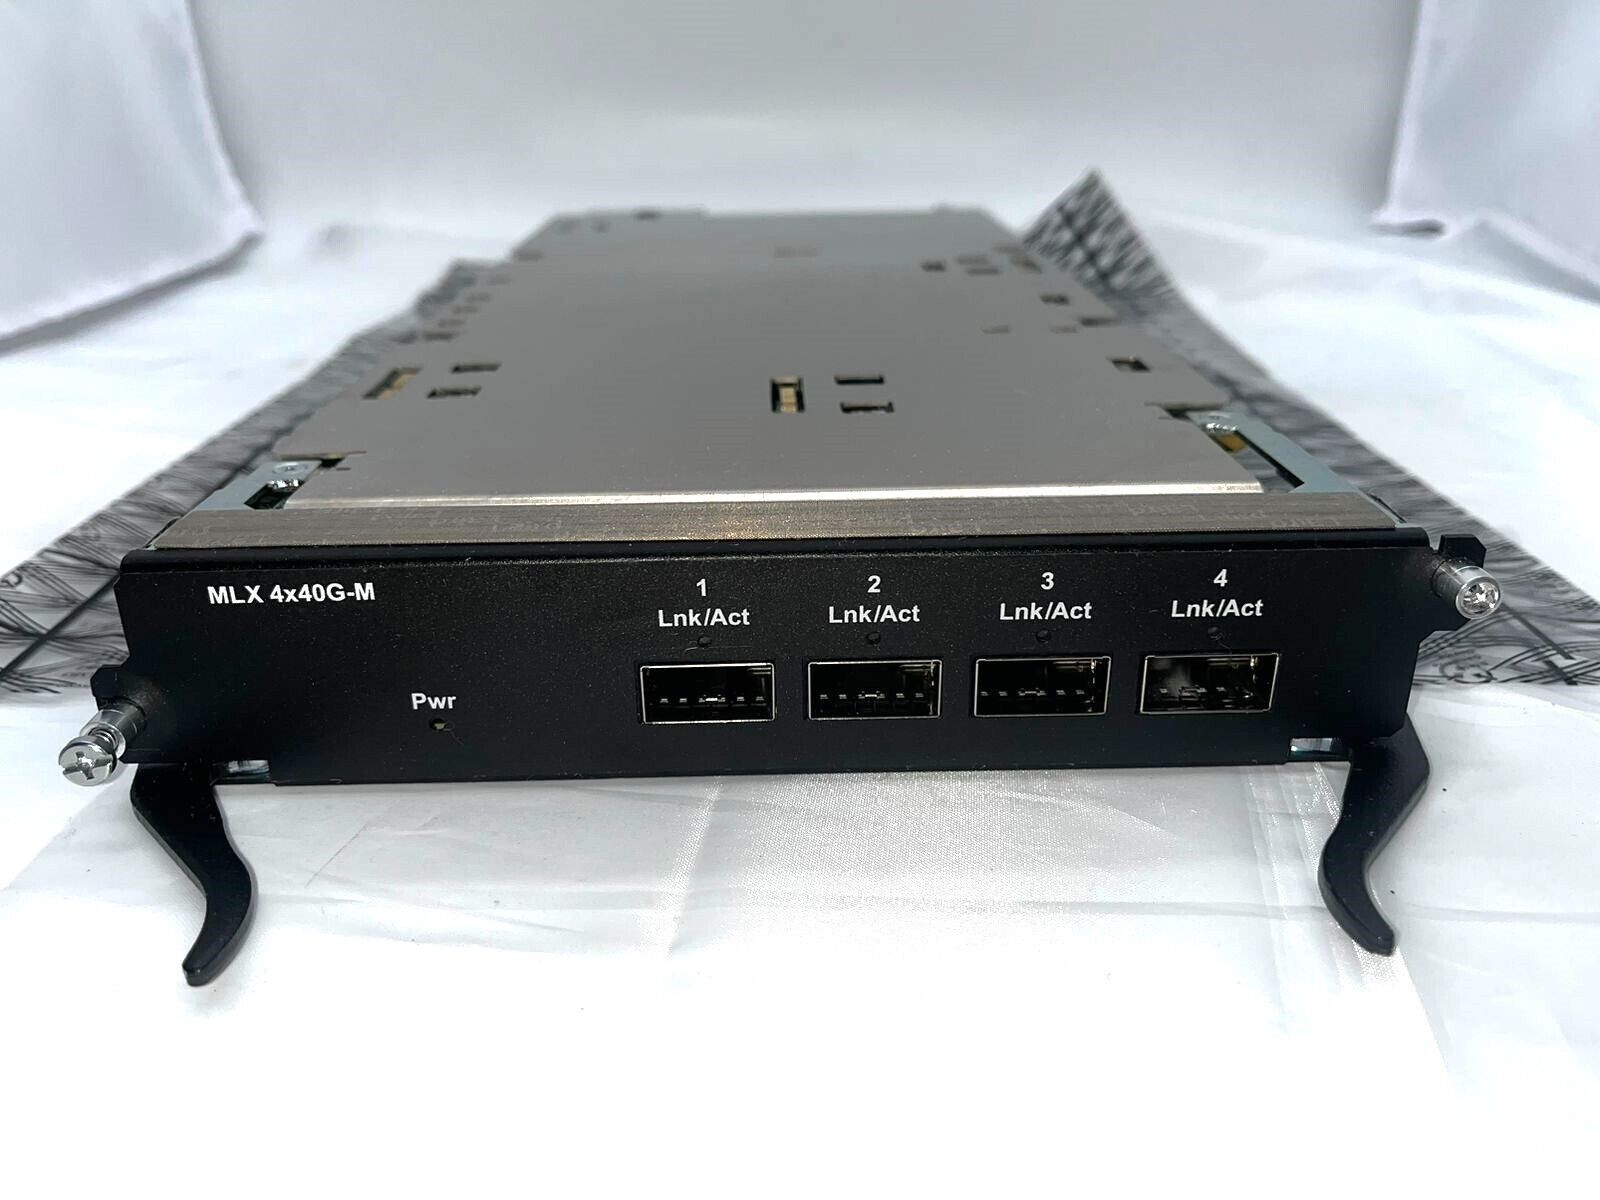 Brocade MLX 4x40G-M Switch Module - READ